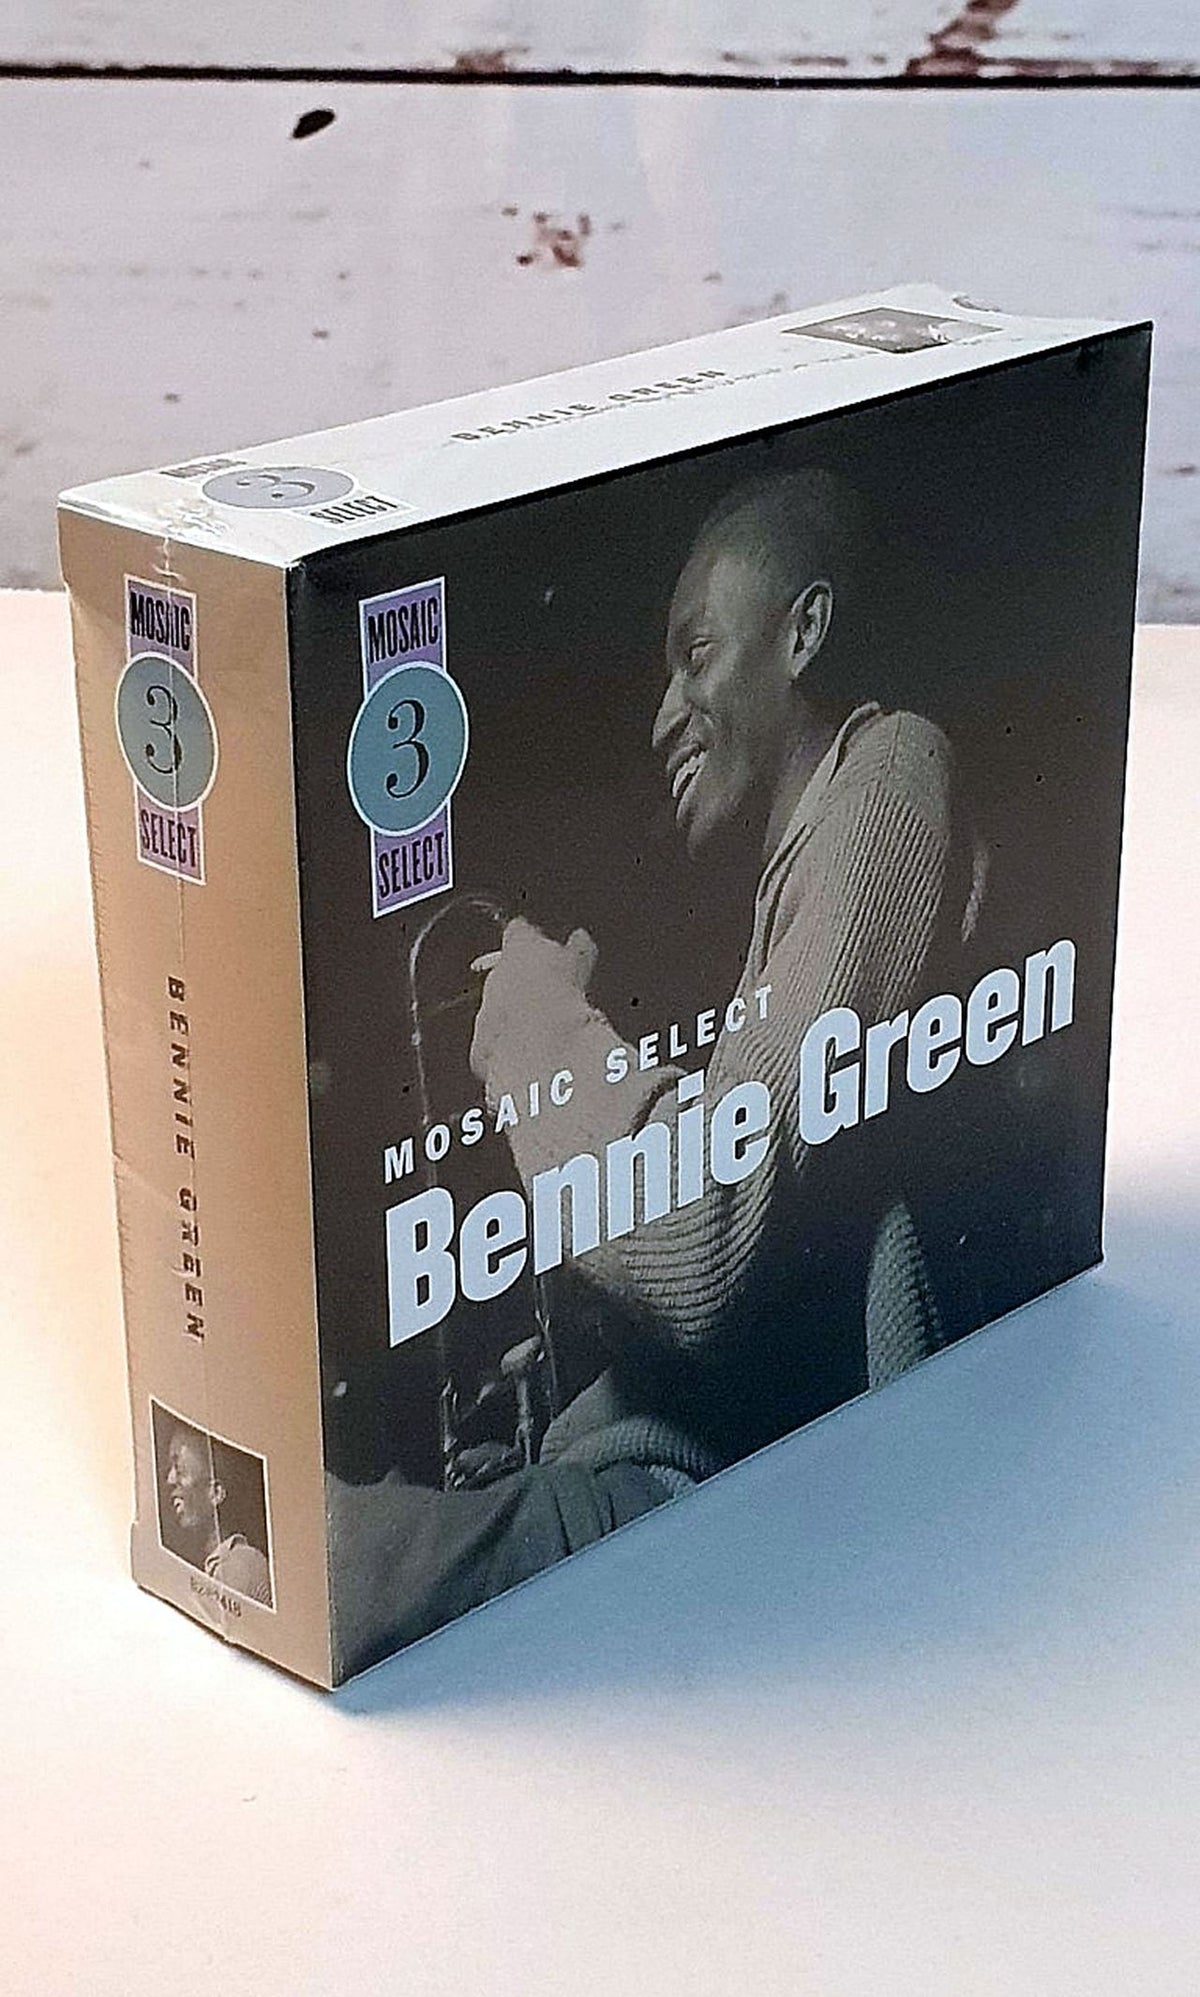 Bennie Green Mosaic Select: Bennie Green US 3-CD set 